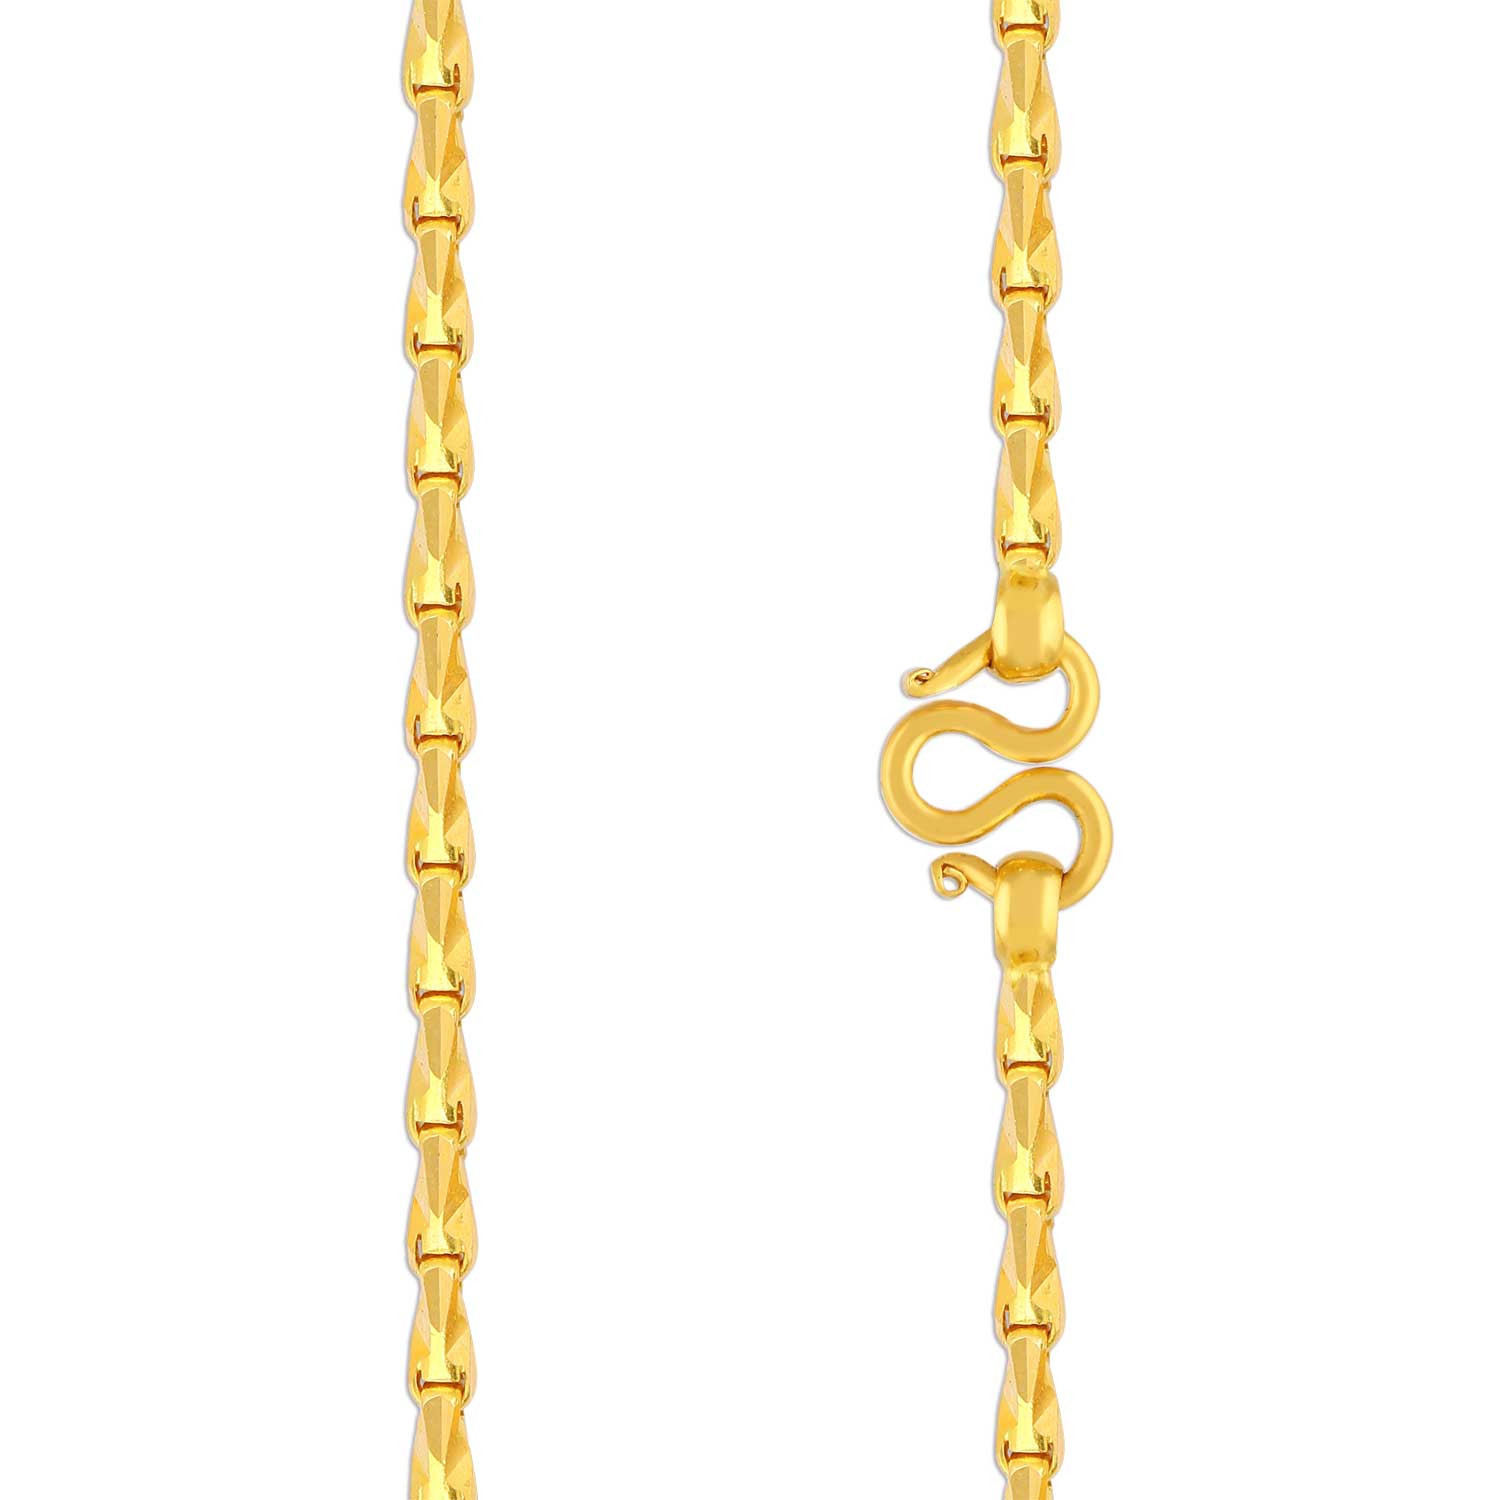 Malabar 22 KT Gold Handcrafted Chain CHSRHMA057